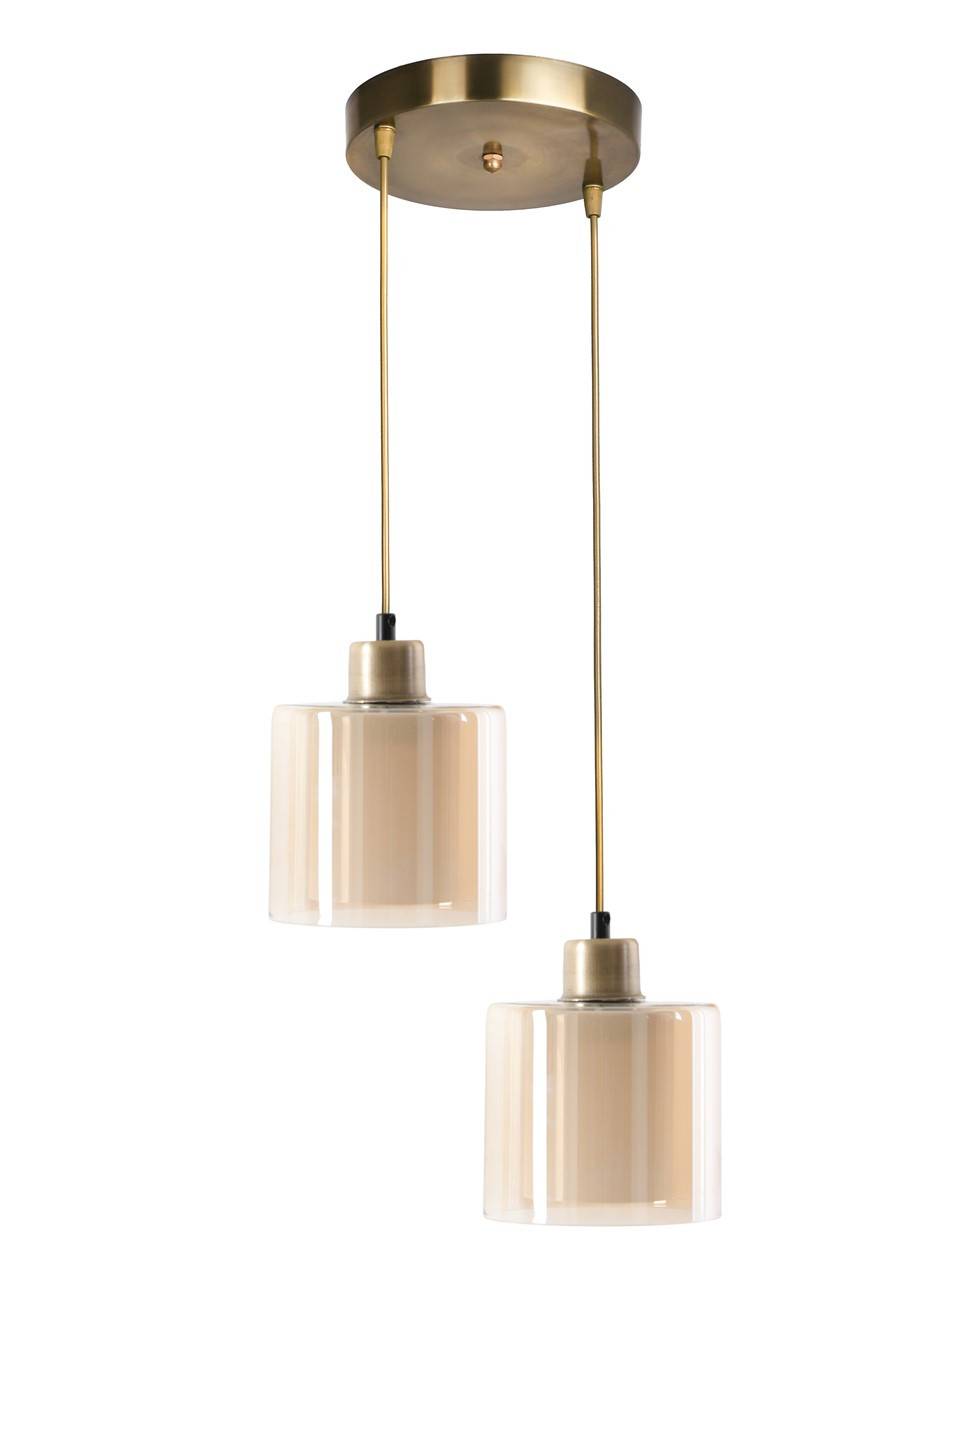 2-cilinder hanglamp/plafondlamp Tropaeum H70 cm Metaal Goud amber glas